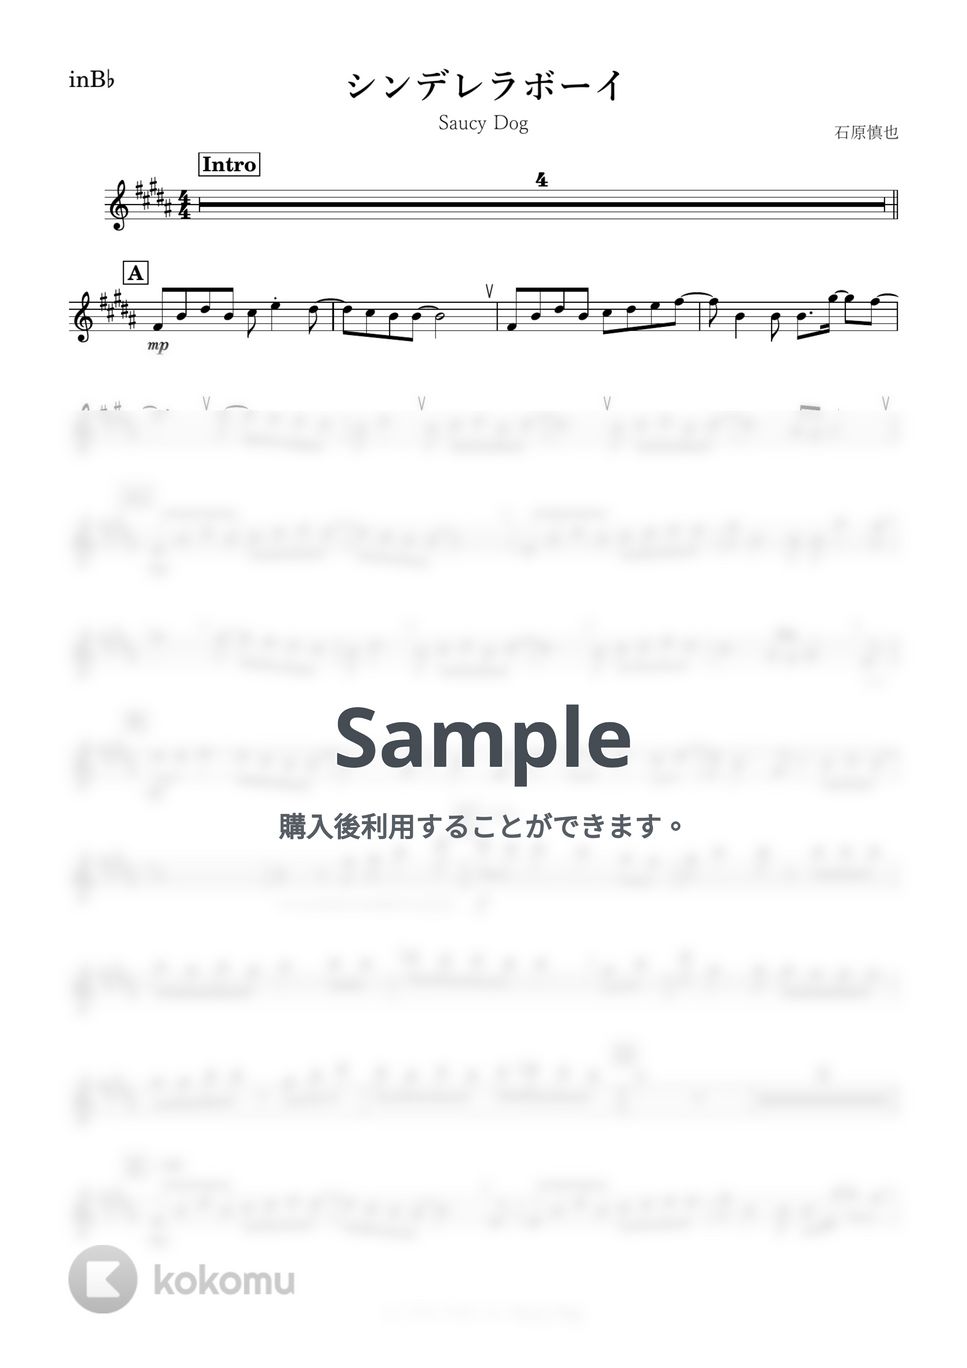 Saucy Dog - シンデレラボーイ (B♭) by kanamusic